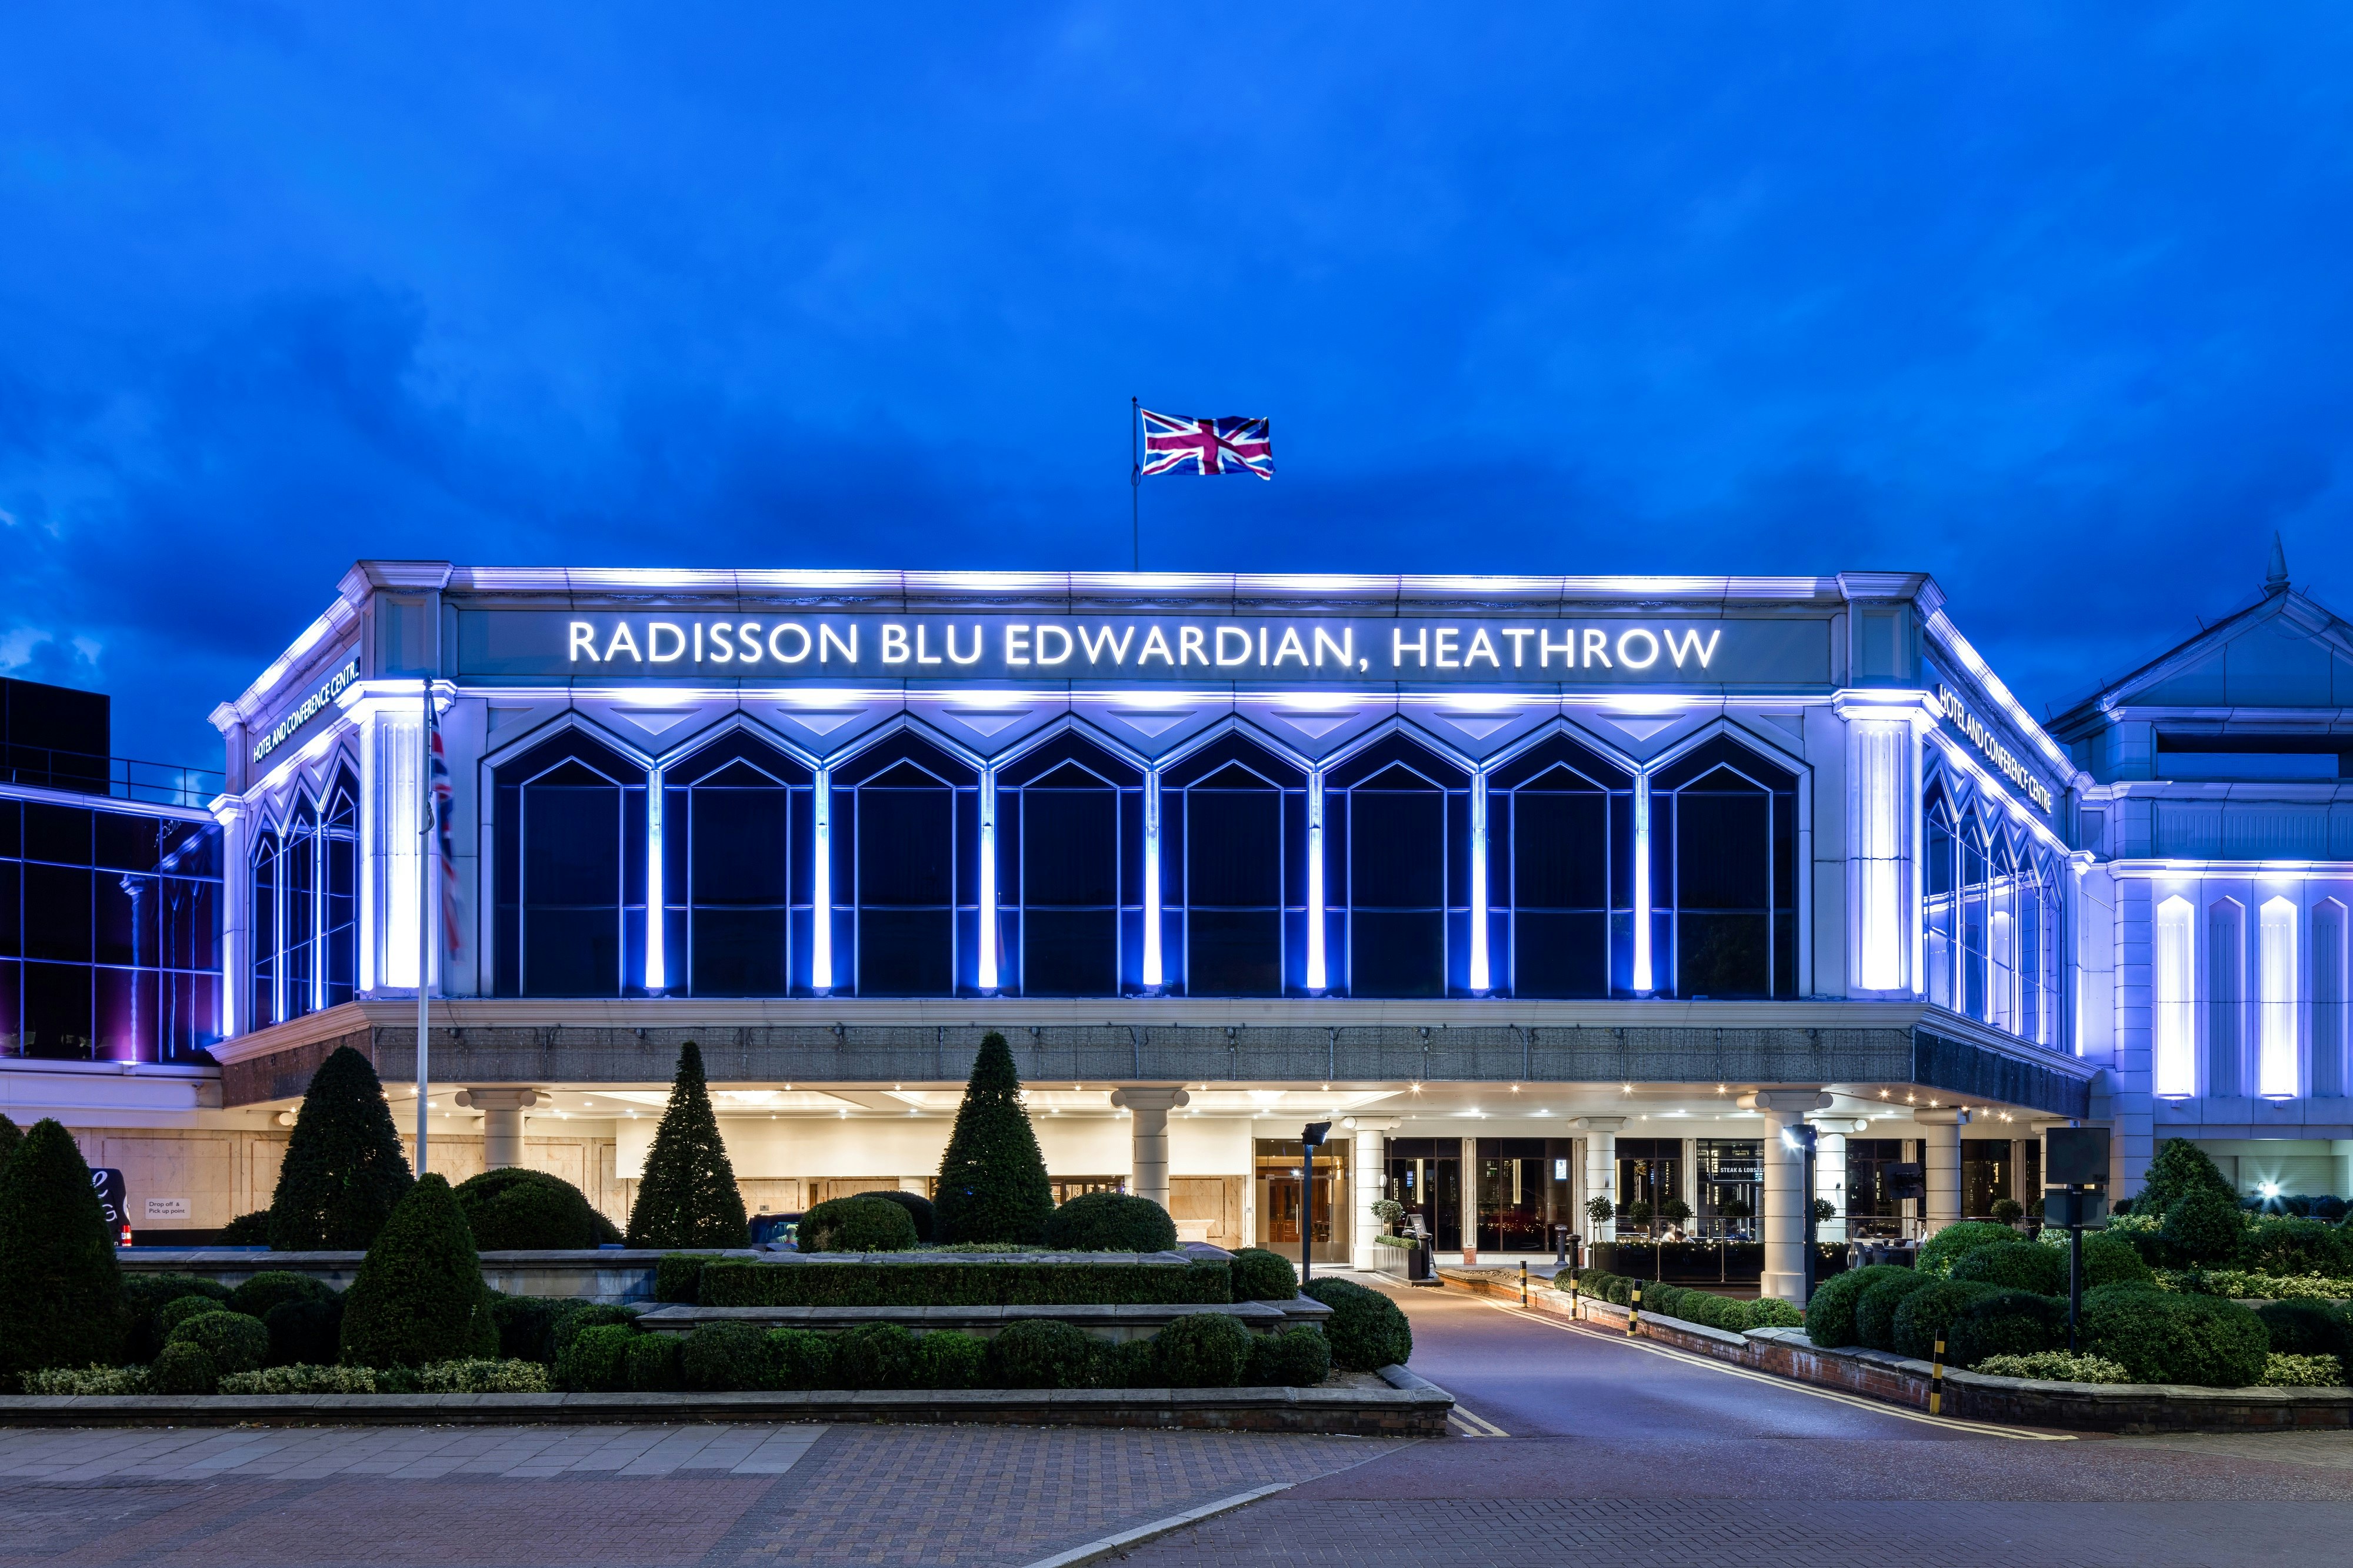 Radisson Blu Edwardian Heathrow - County D image 2